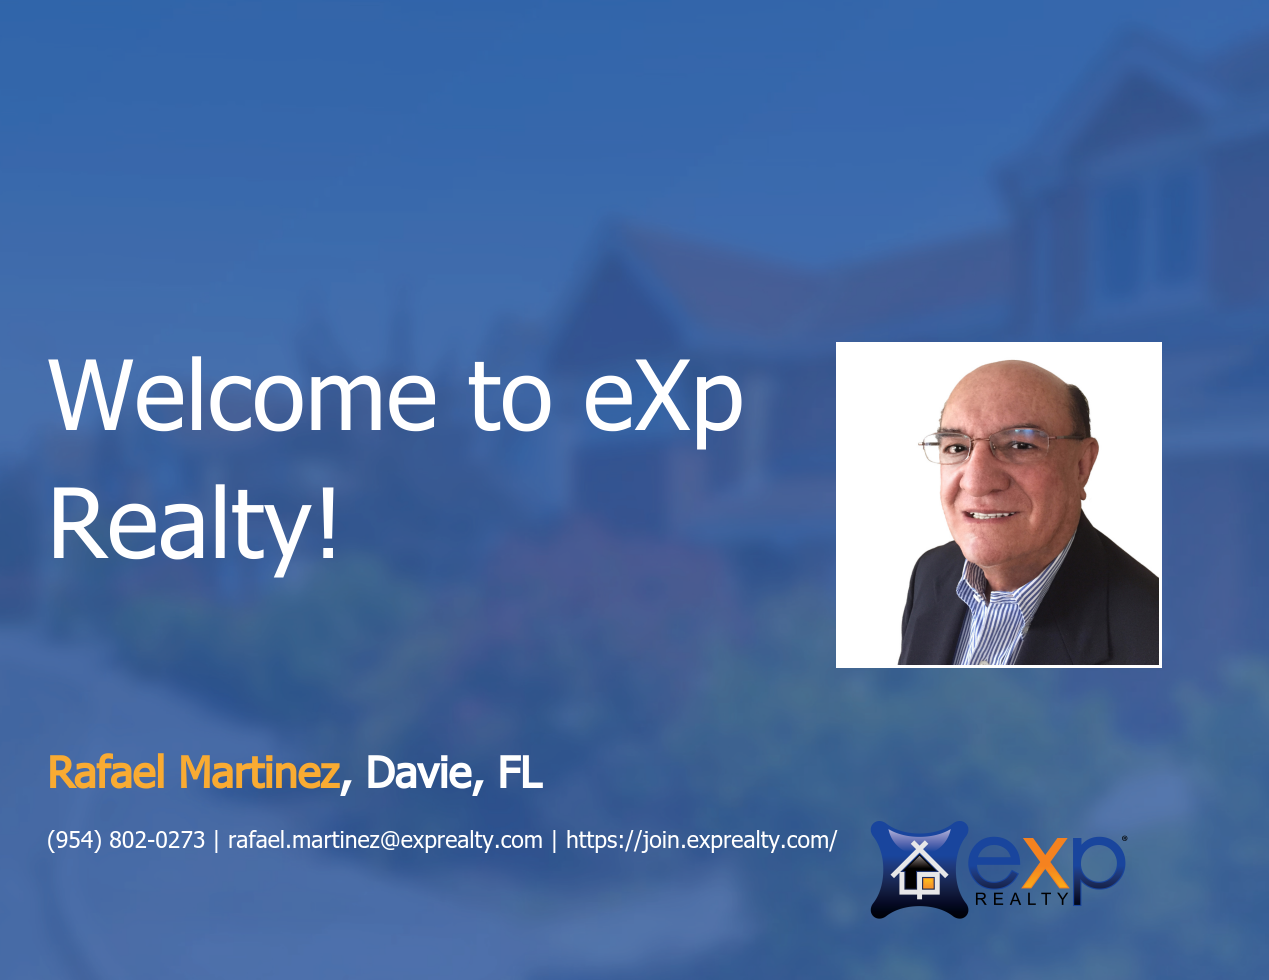 eXp Realty Welcomes Rafael Martinez!